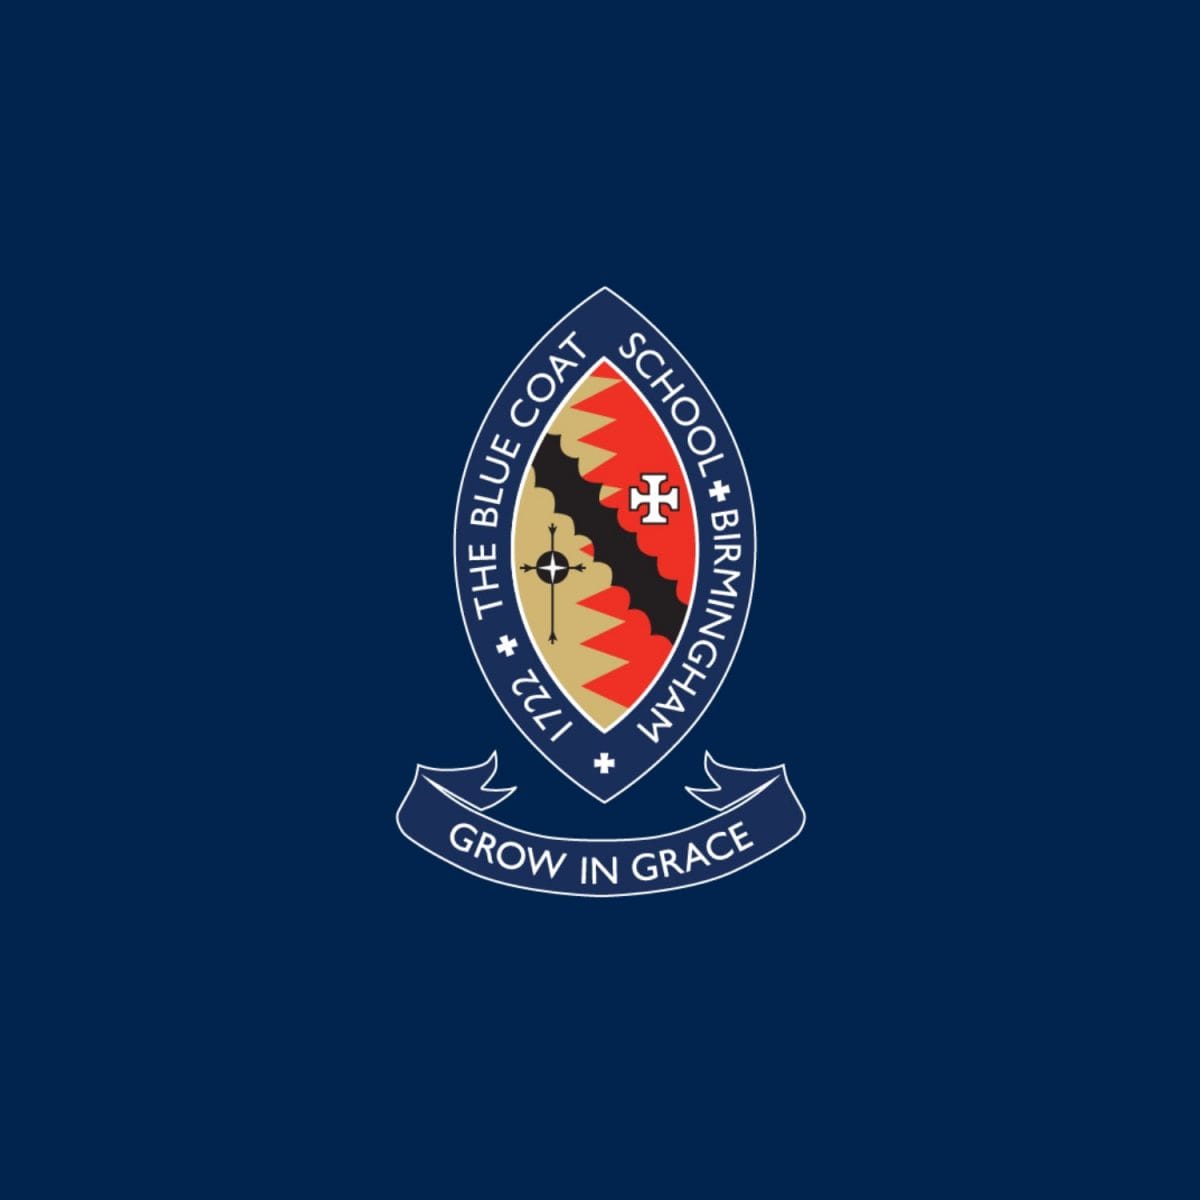 The Blue Coat School crest.